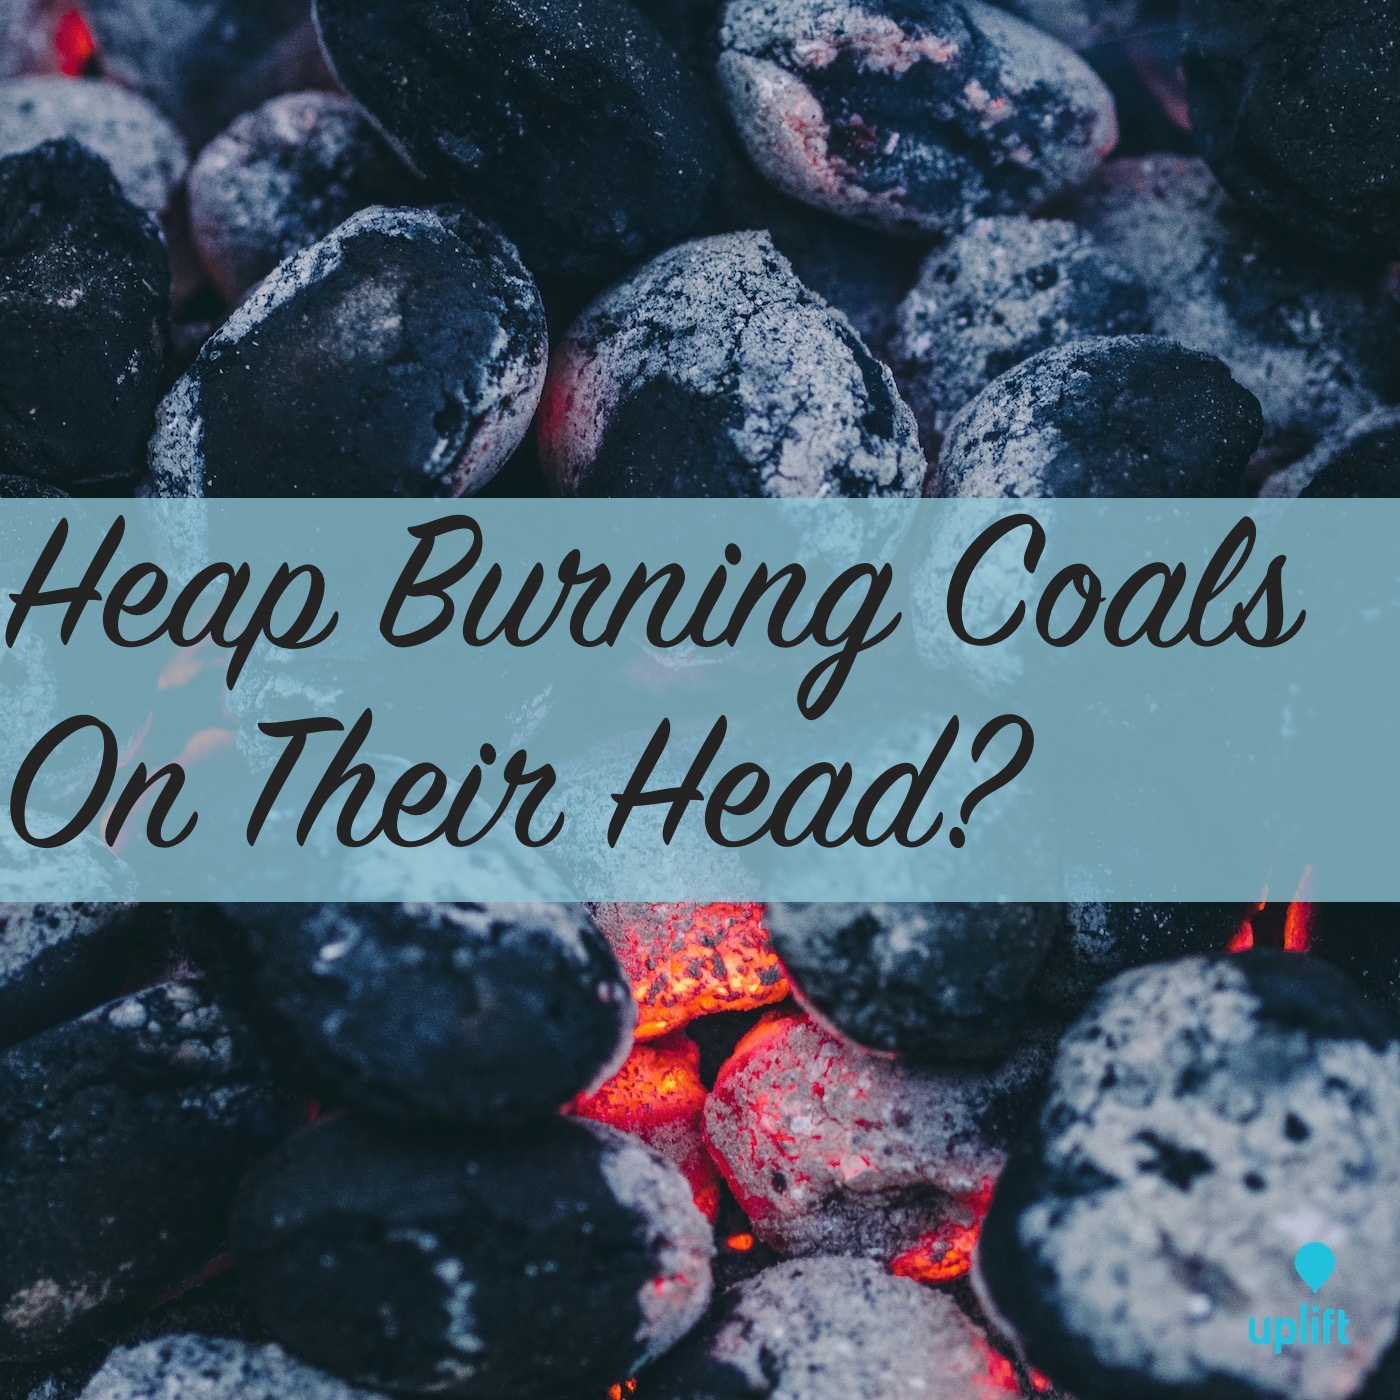 Episode 20: Heap Burning Coals On Their Head?